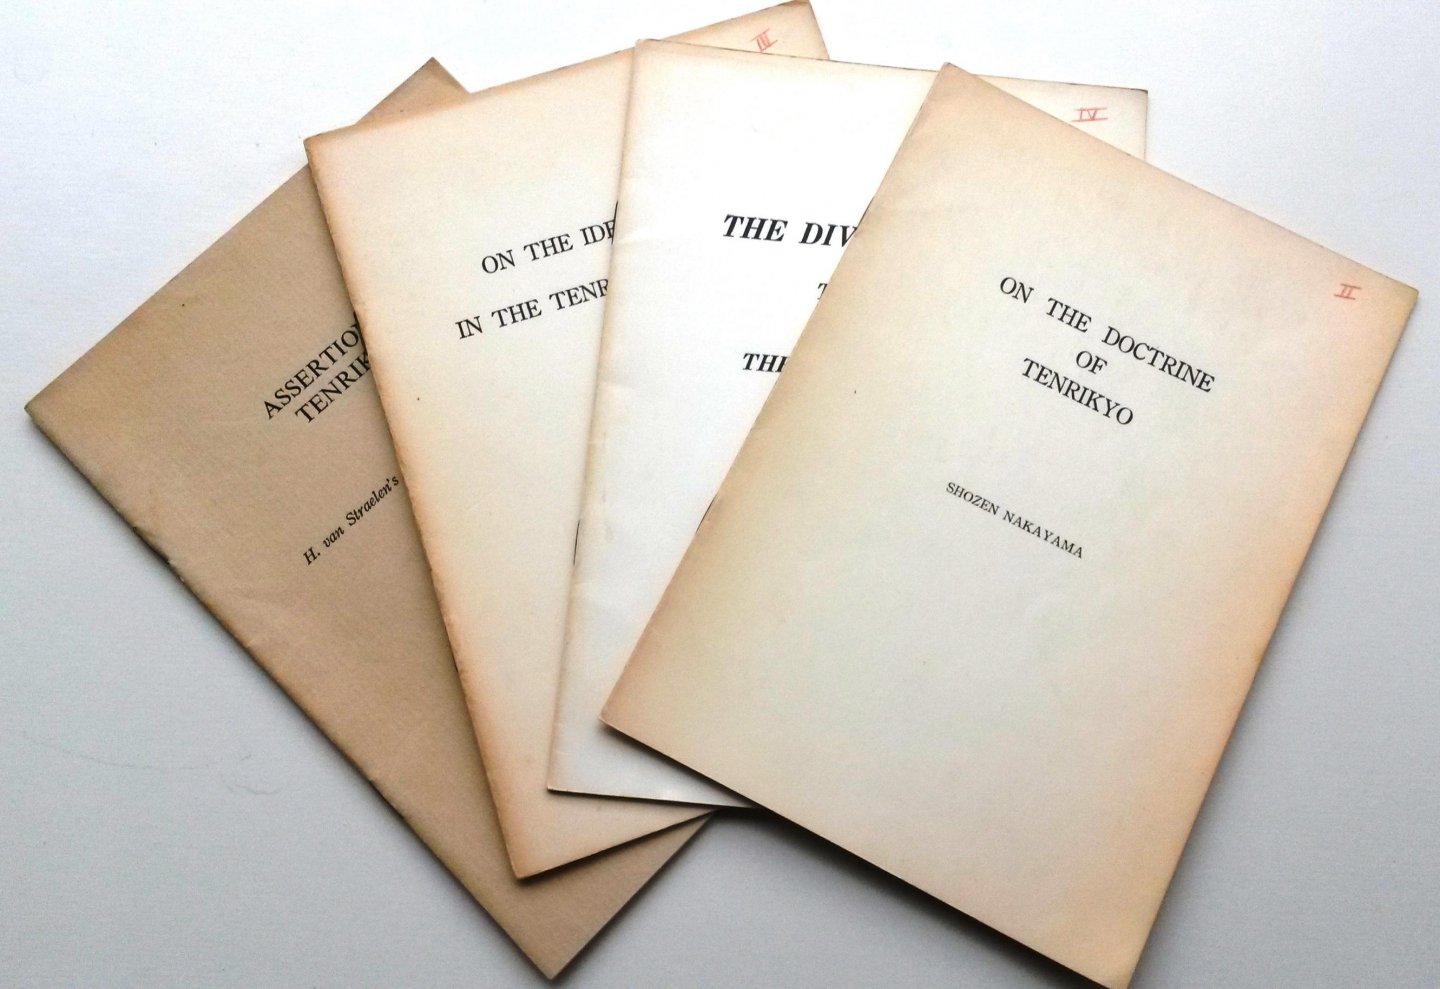 Nakayama, Shozen (et al) - Four pamphlets on the doctrine of Tenrikyo - 1954/1959